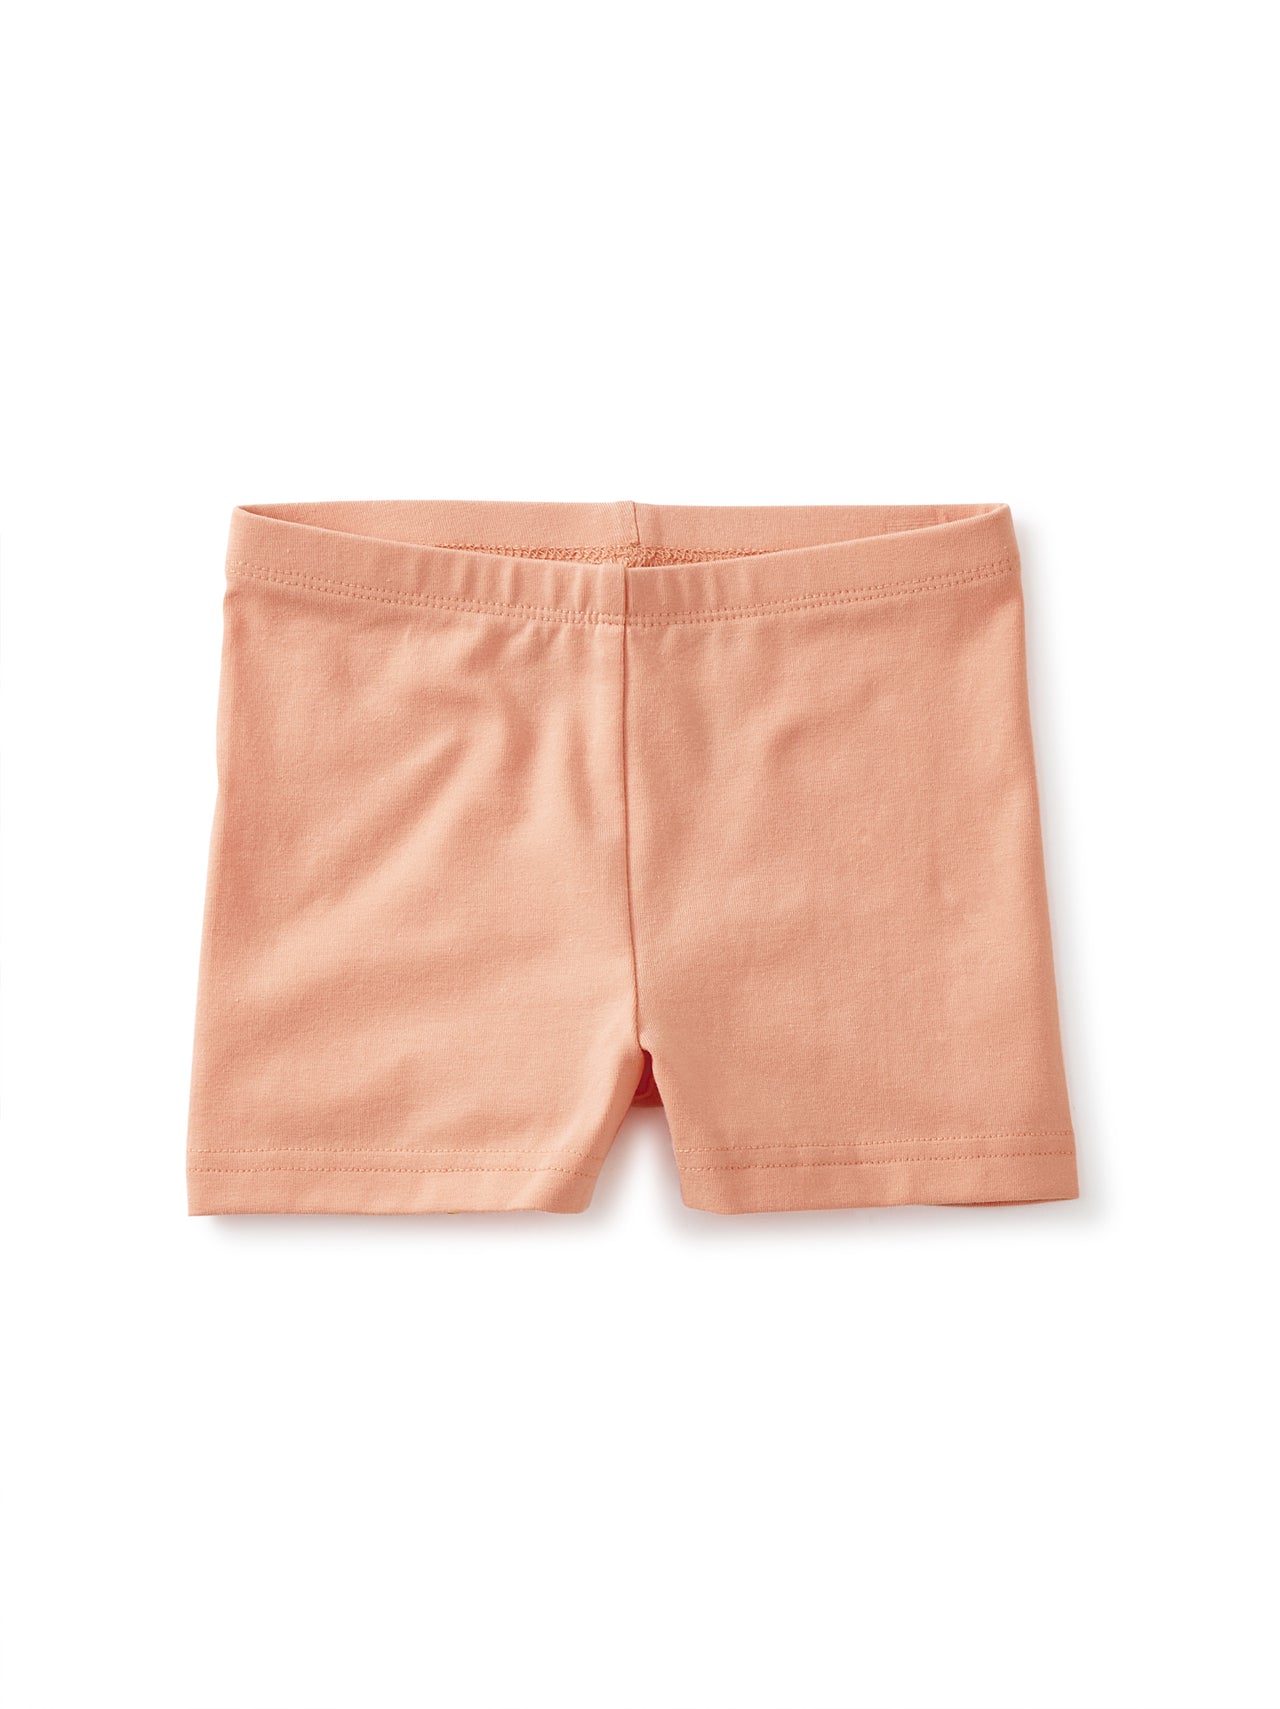 Somersault Shorts- Peach